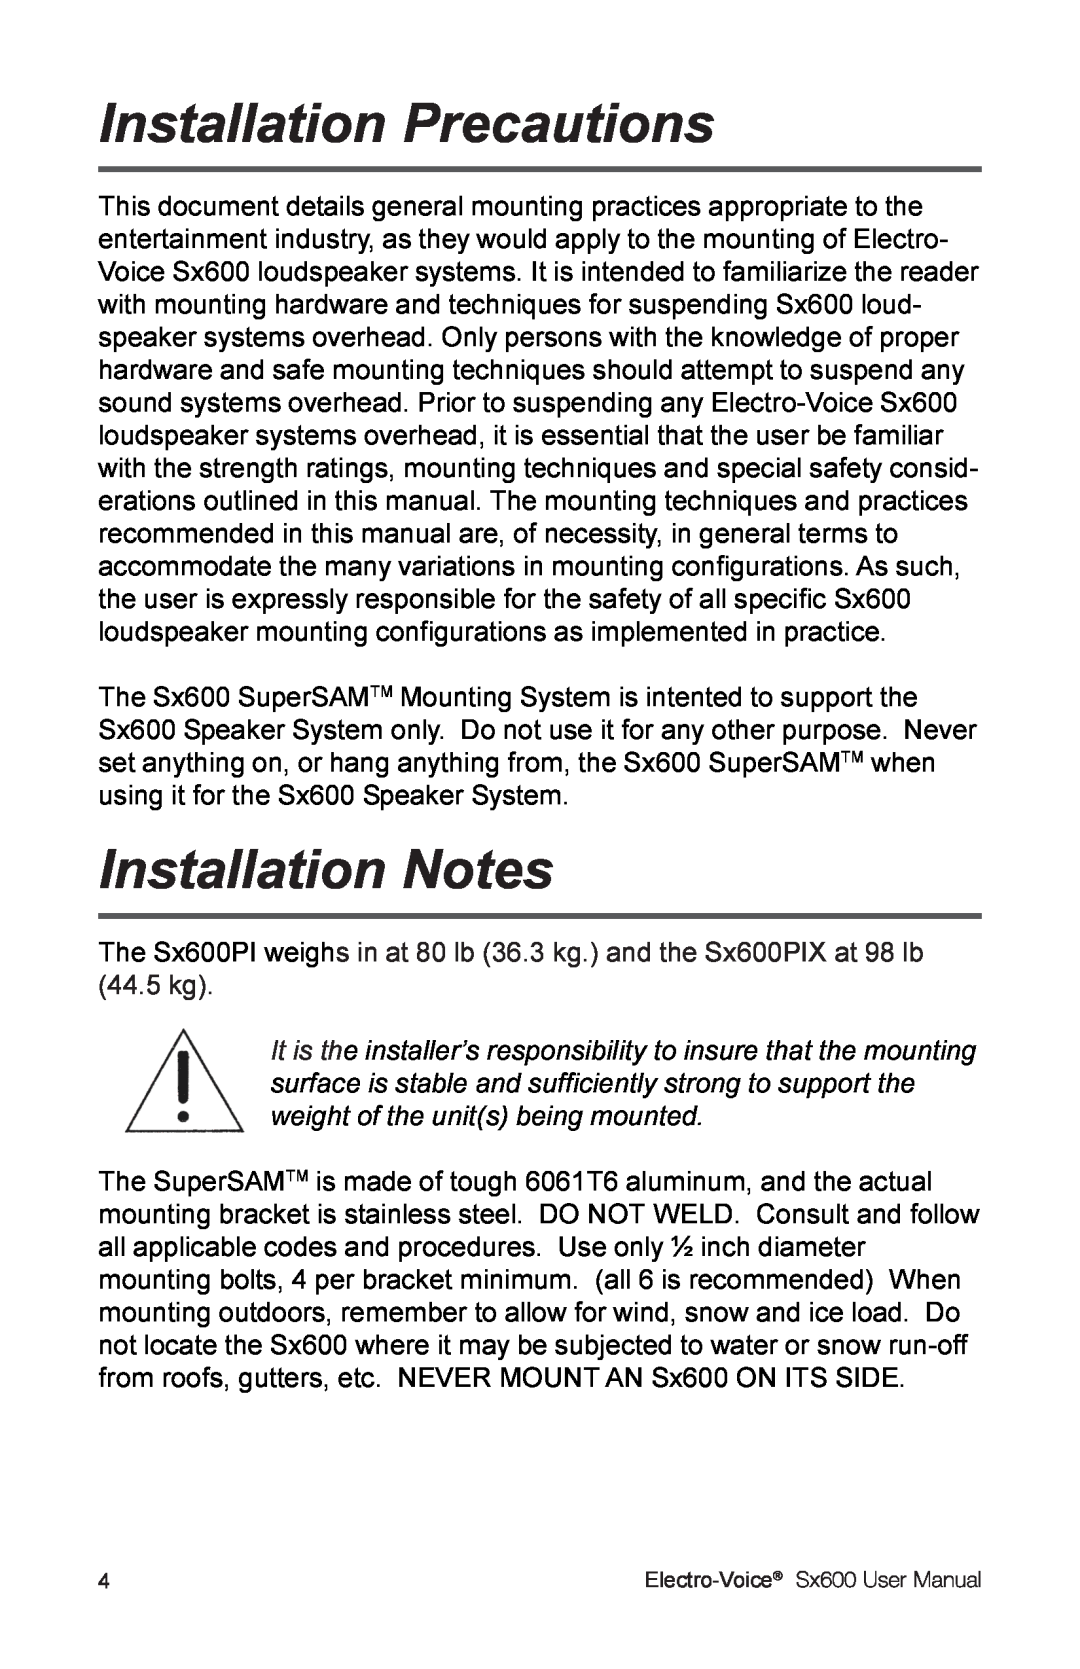 Electro-Voice Sx600 user manual Installation Precautions, Installation Notes, Electro-Voice 